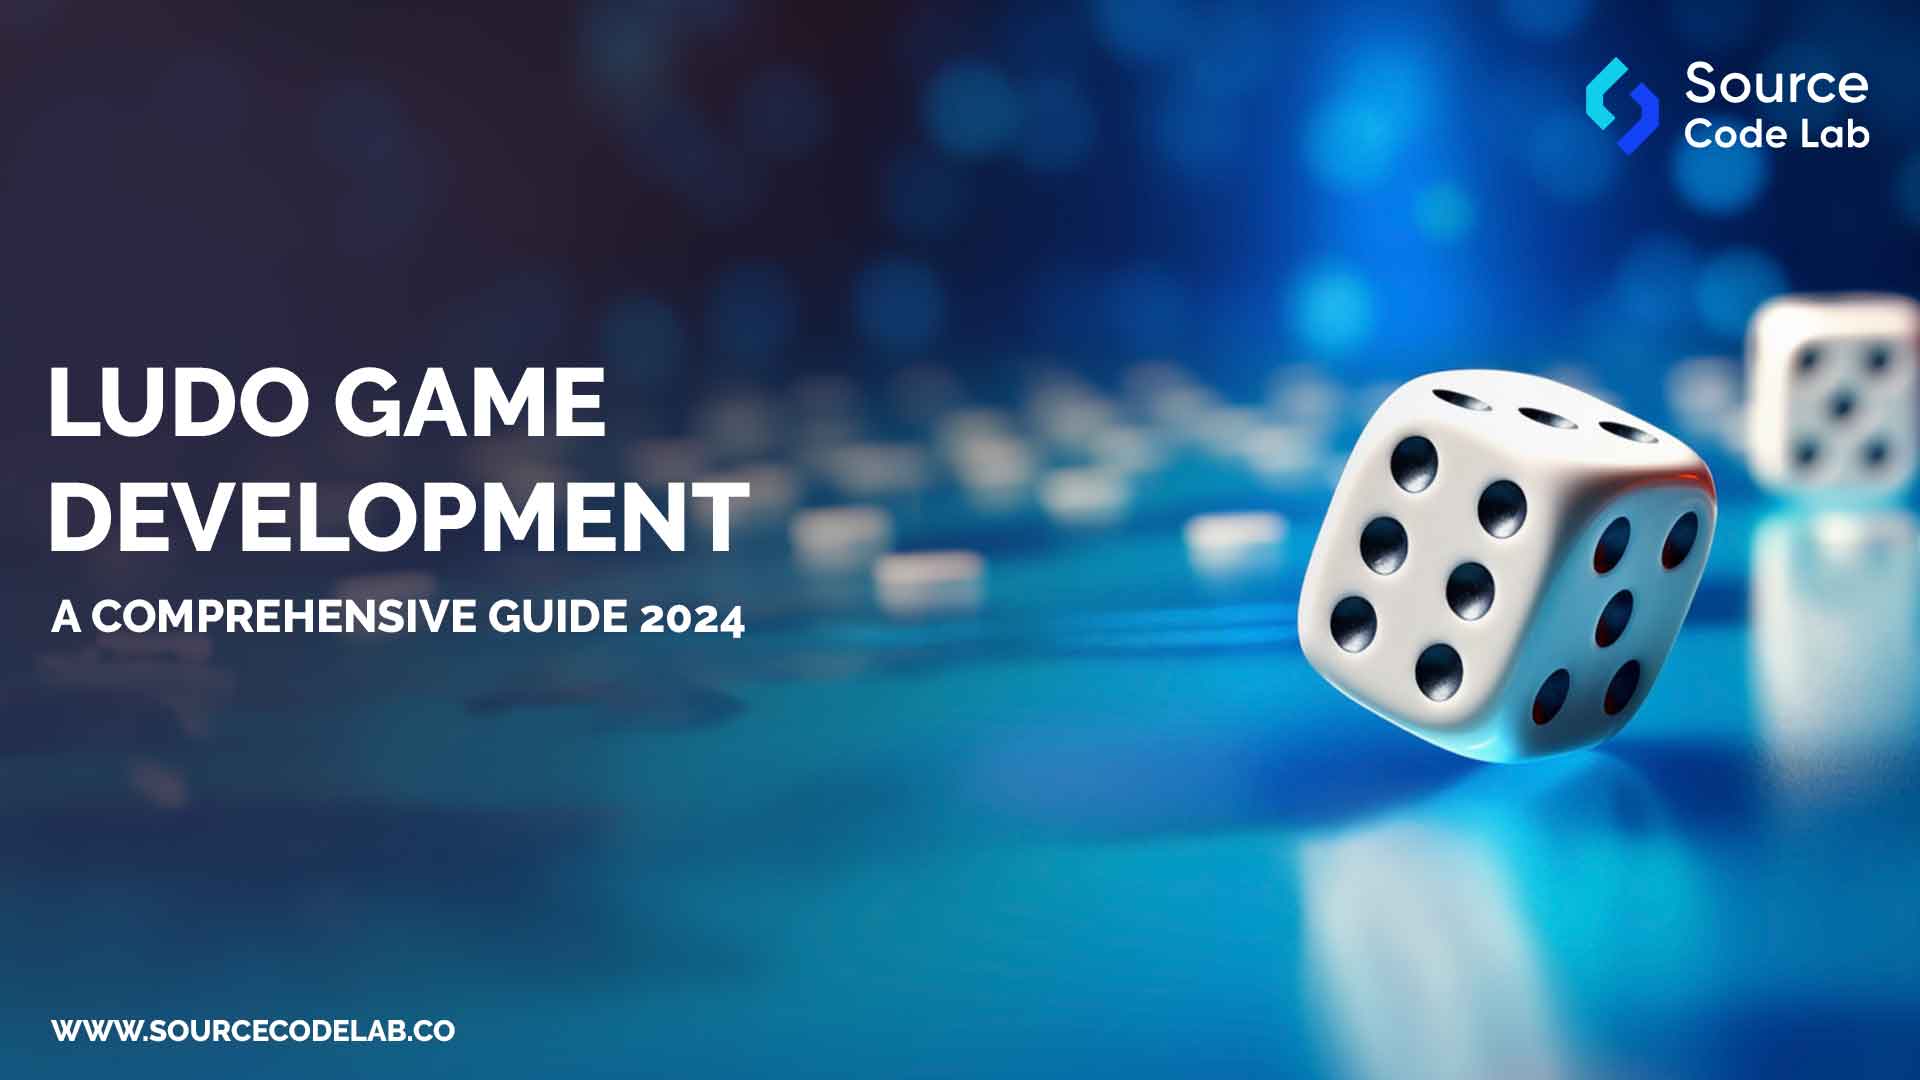 Ludo Game Development: A Comprehensive Guide